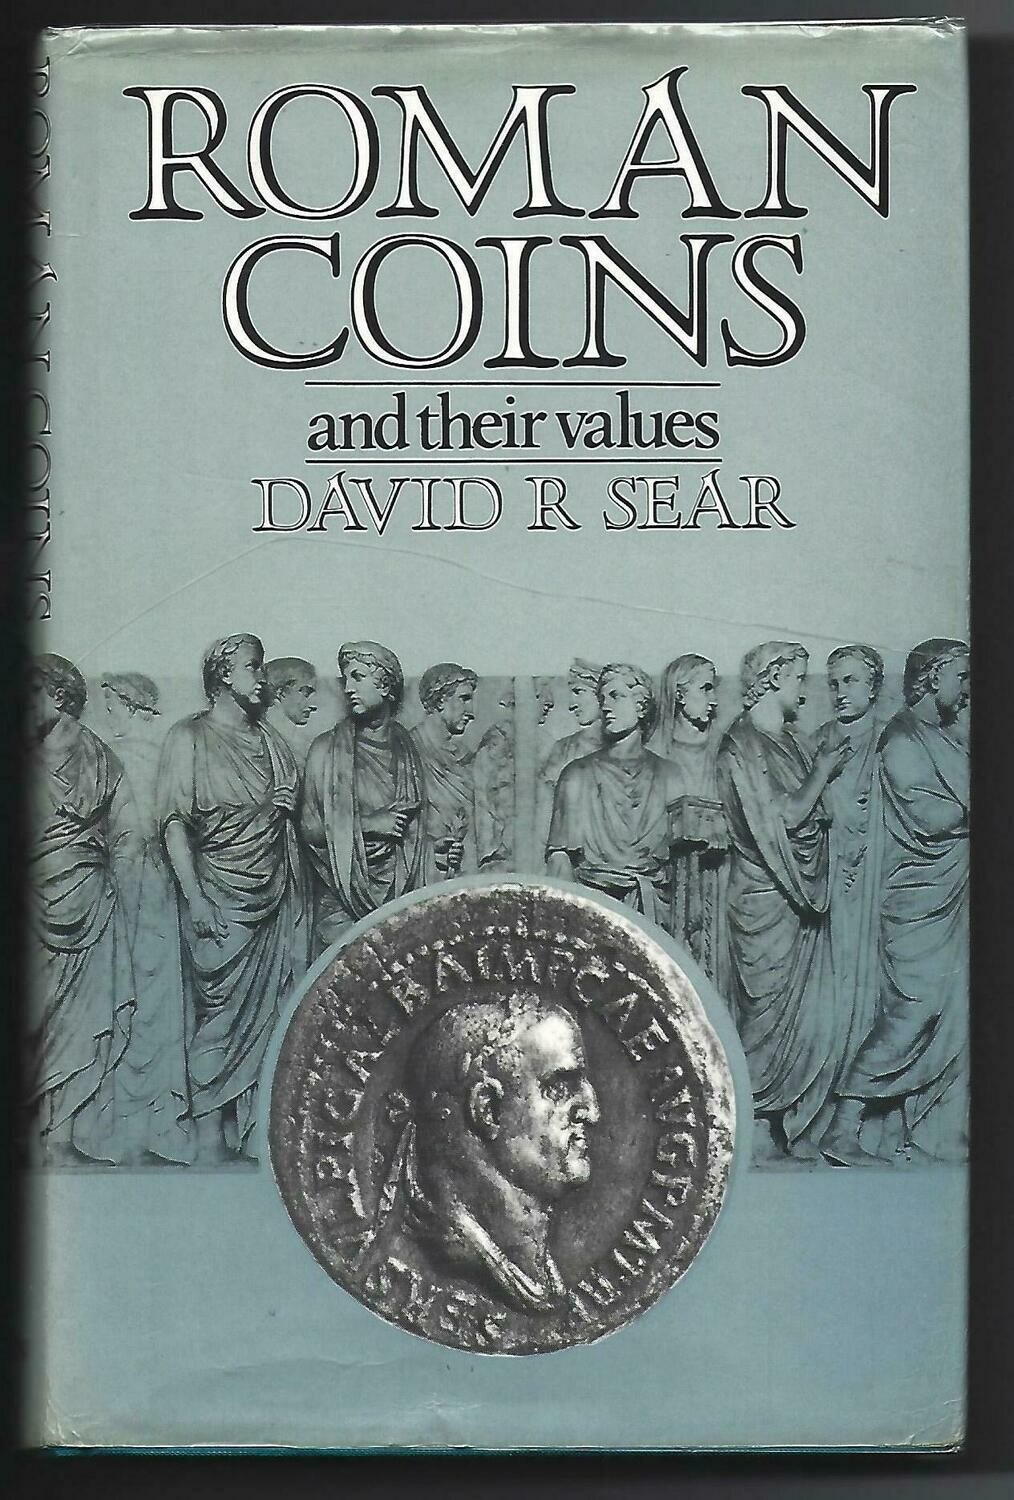 Ancients; David R. Sear, "Roman Coins and their values."